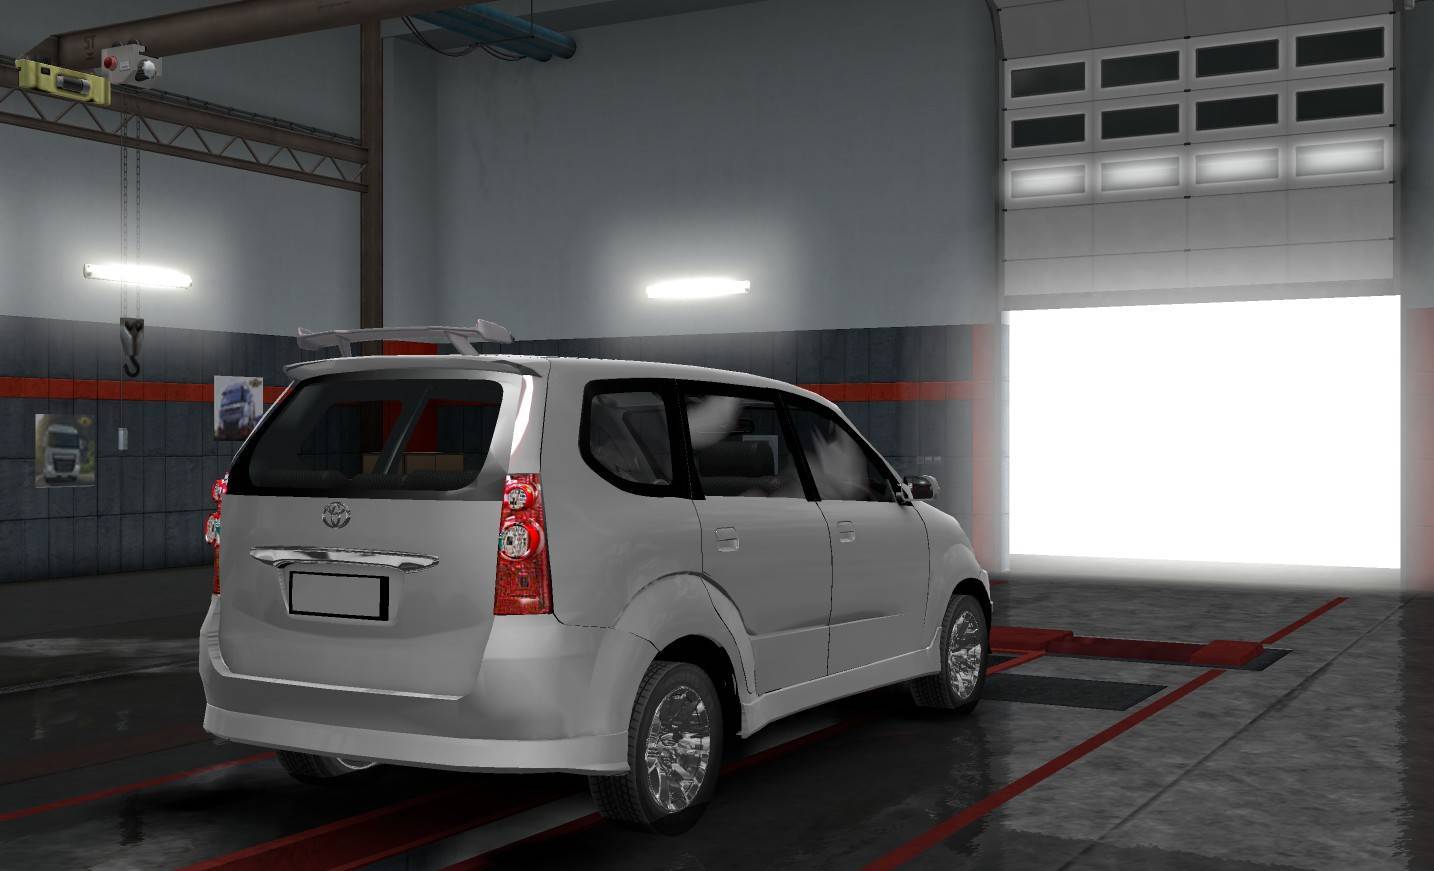  Mod  Mobil  Toyota  Avanza Mod  ETS2  Indonesia